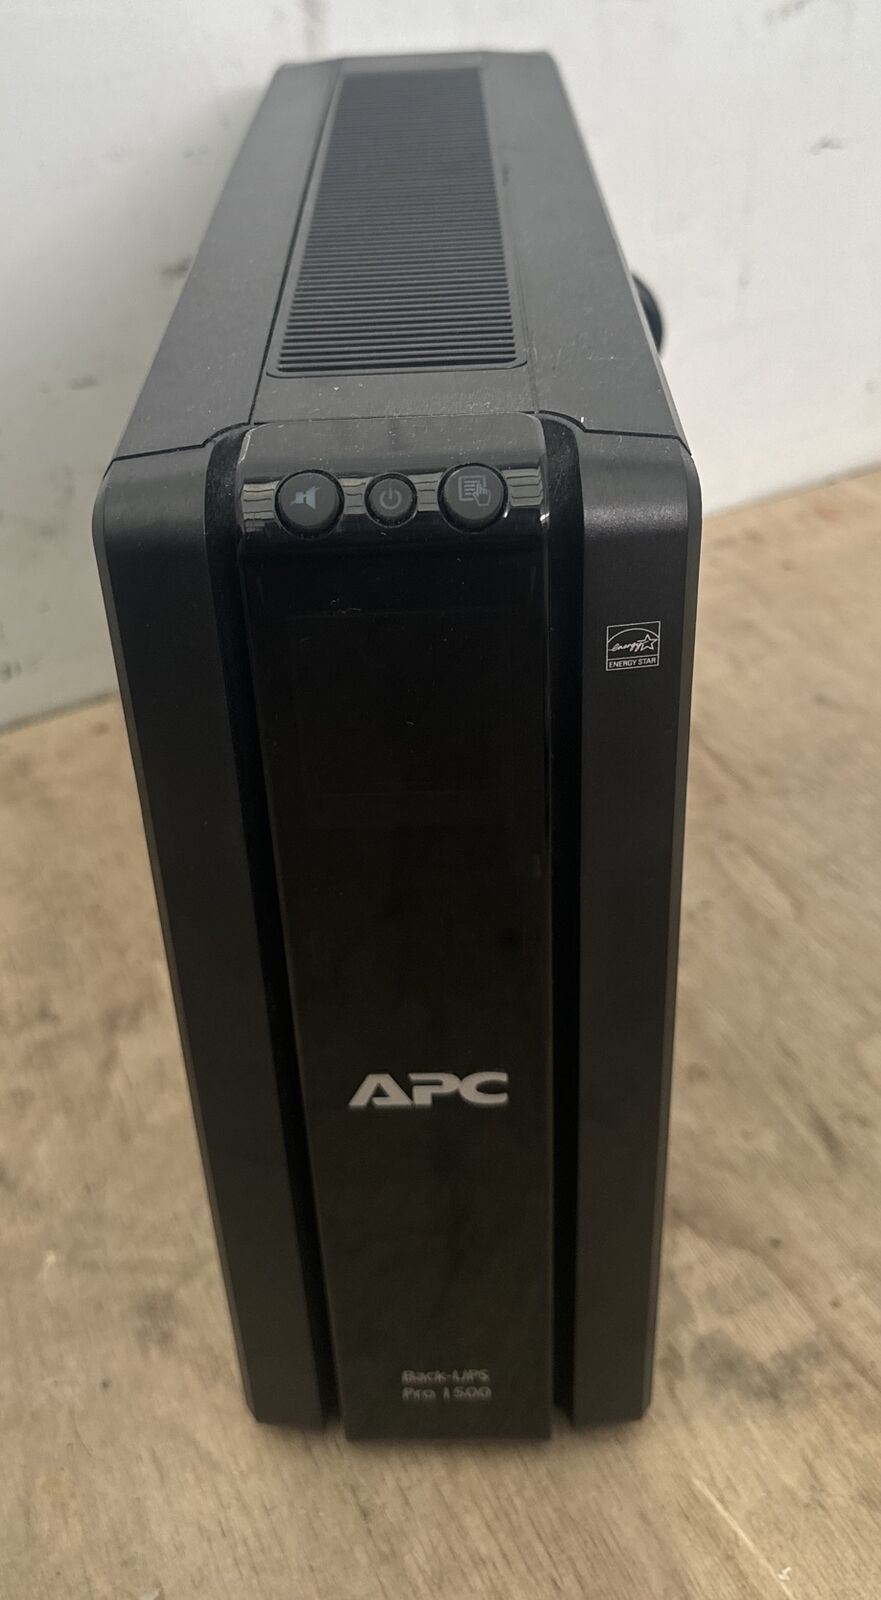 APC BR1500G Back-ups Pro 1500 Battery Backup & Surge Protector NO BATTERY